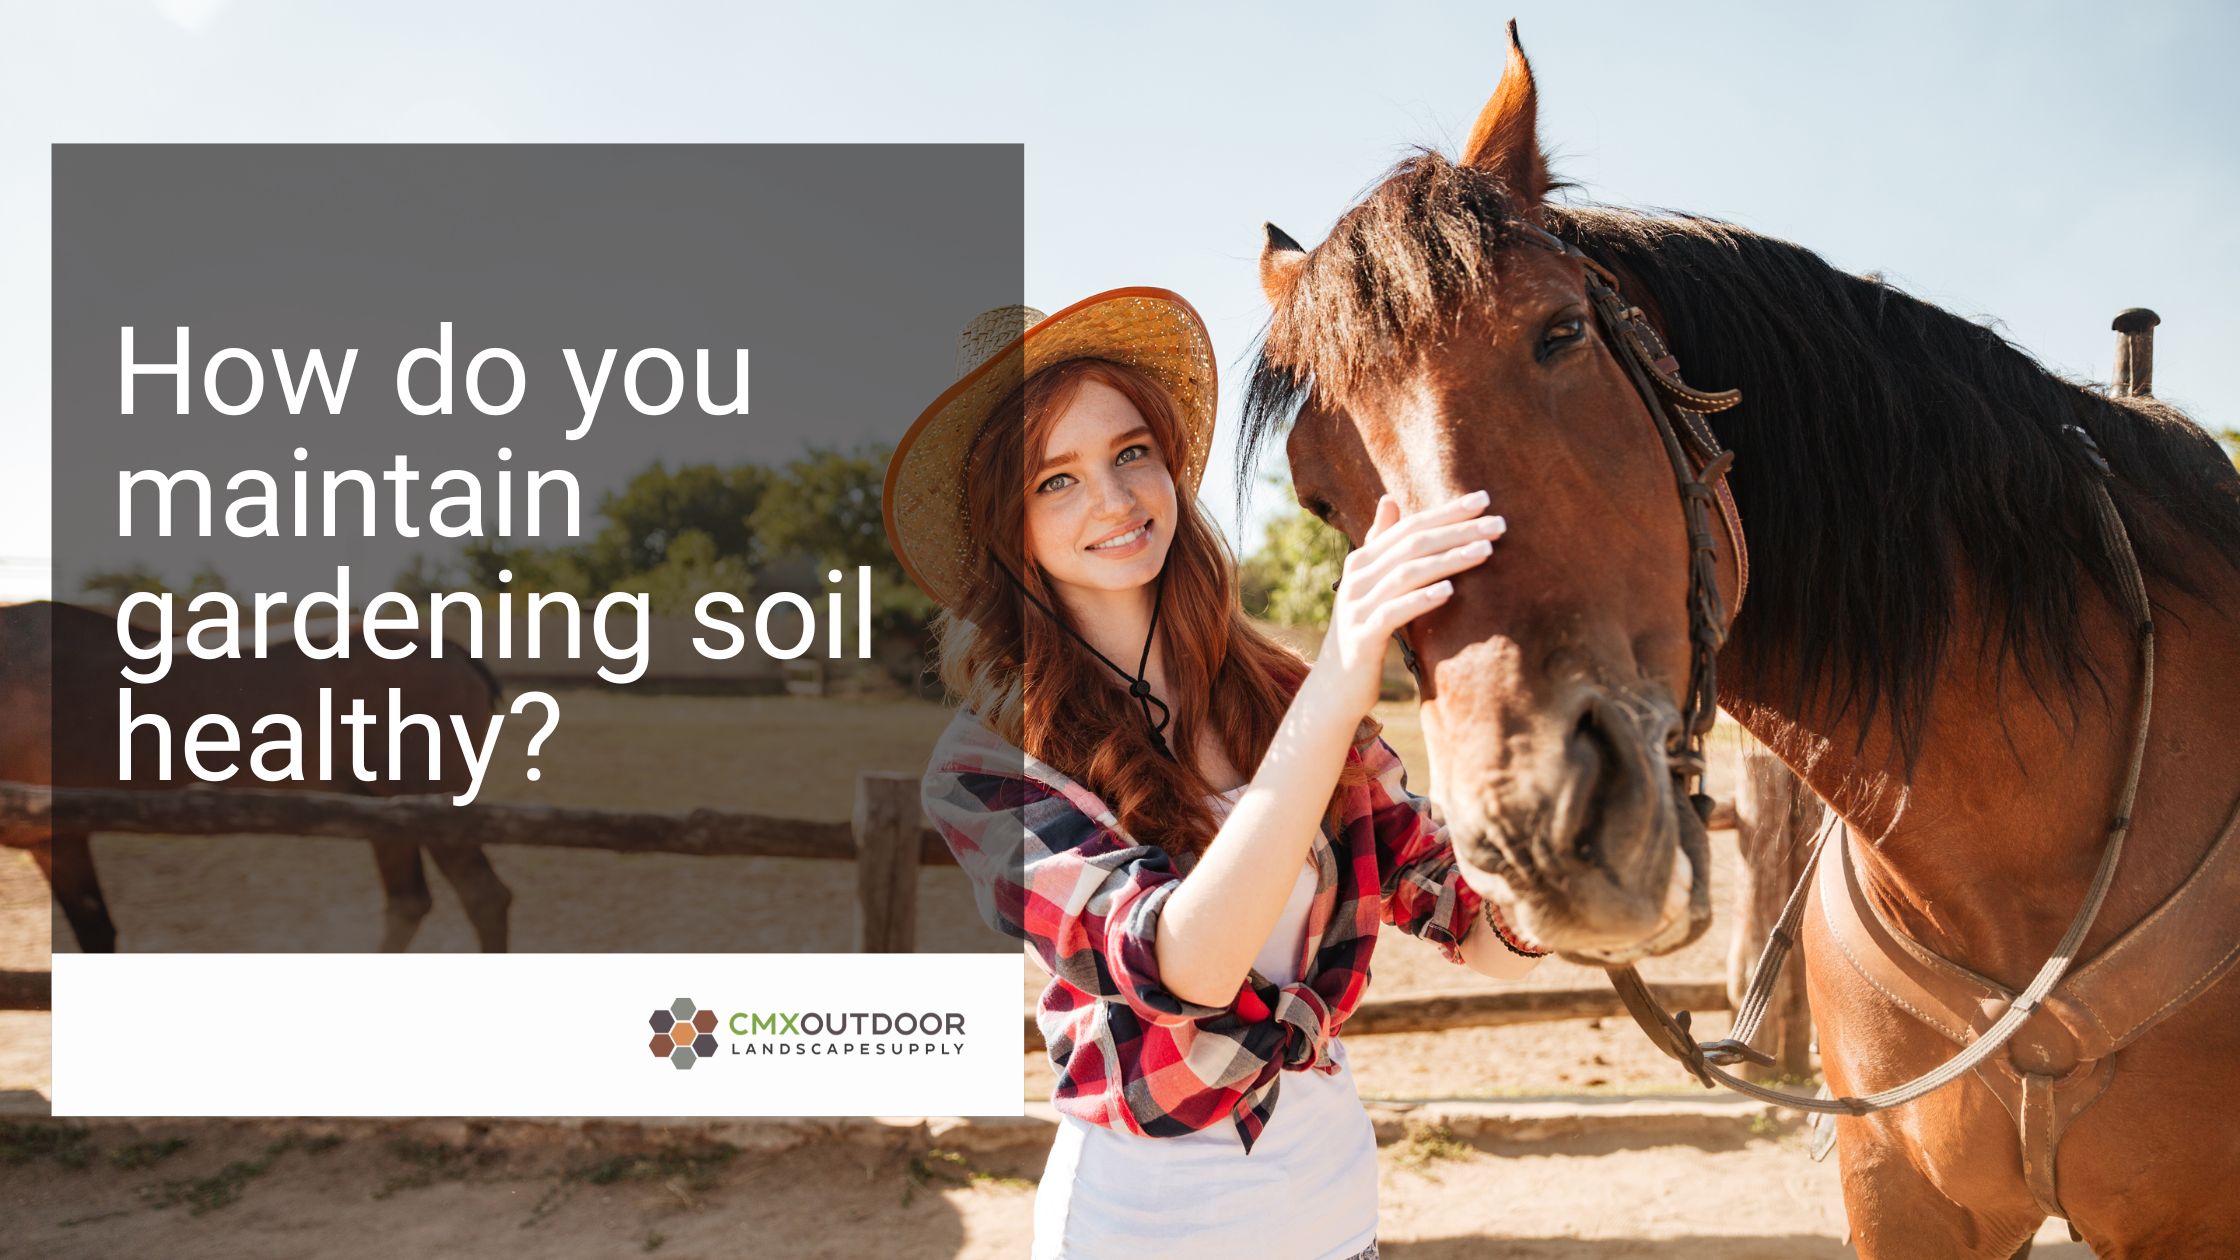 How do you maintain gardening soil healthy?